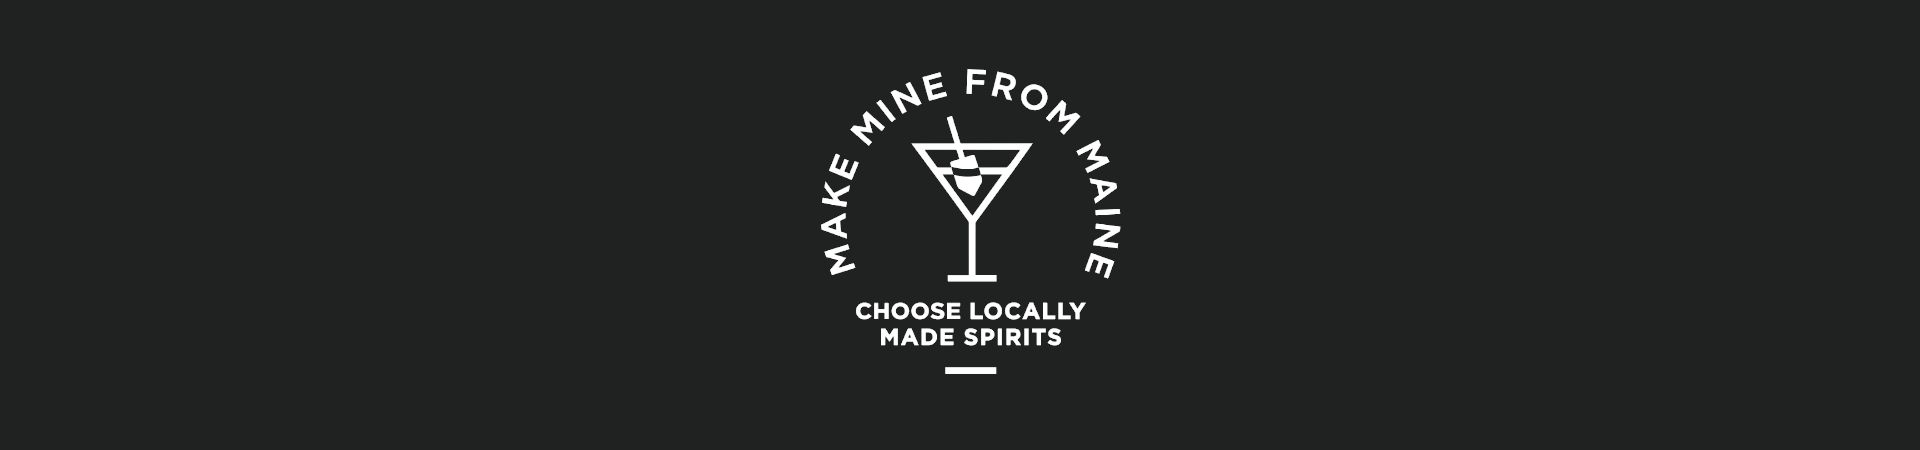 Make mine from Maine - Choose locally made spirits